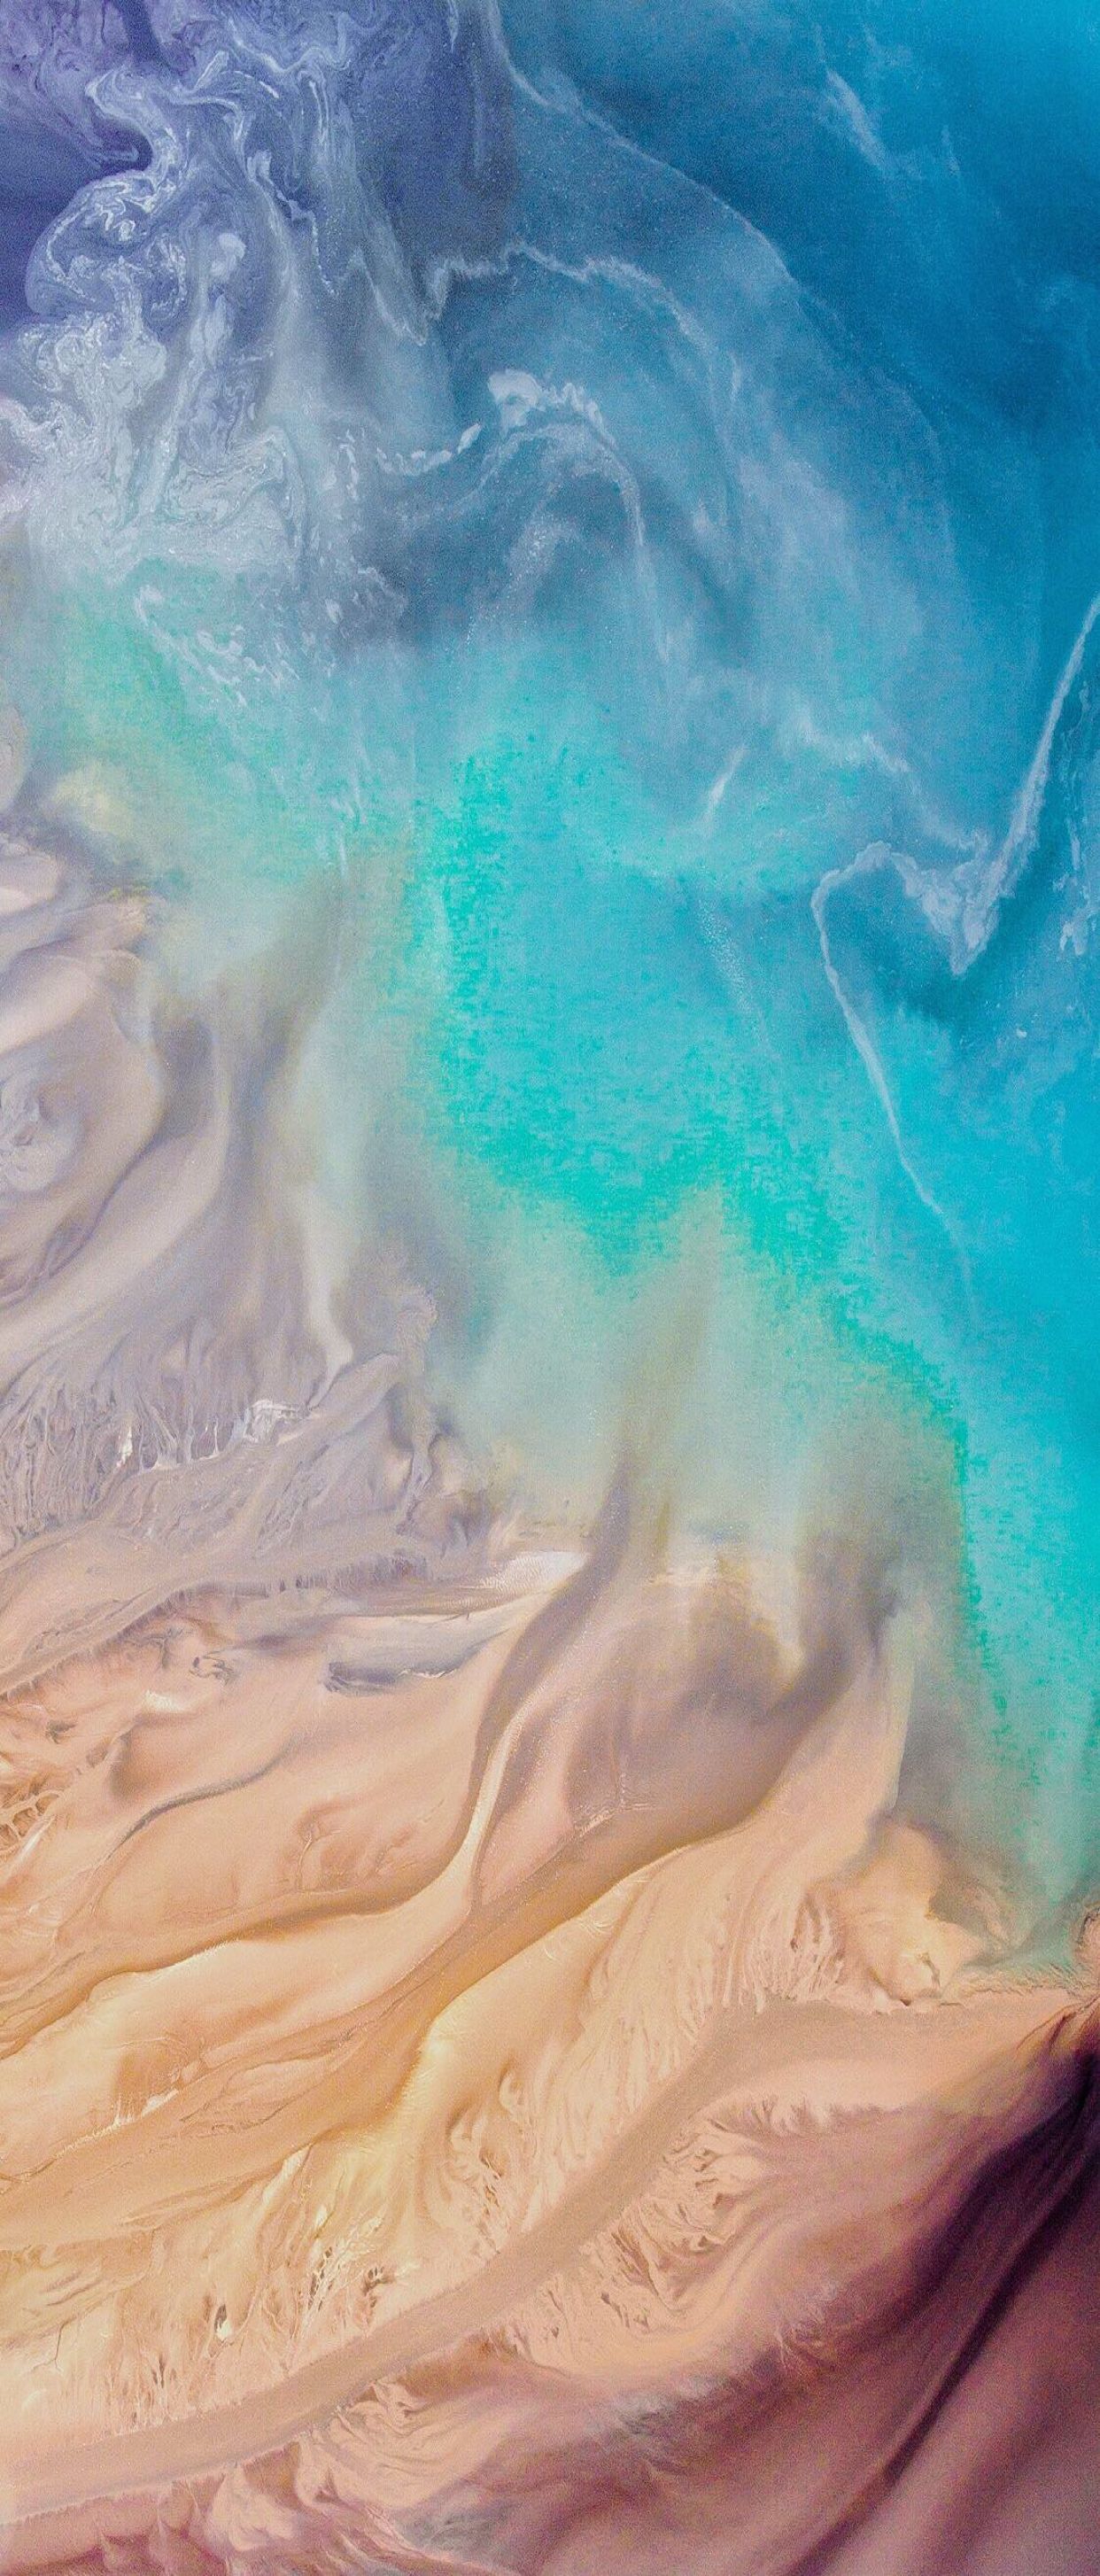 Free download iOS 11 iPhone X Aqua blue Water beach wave ocean